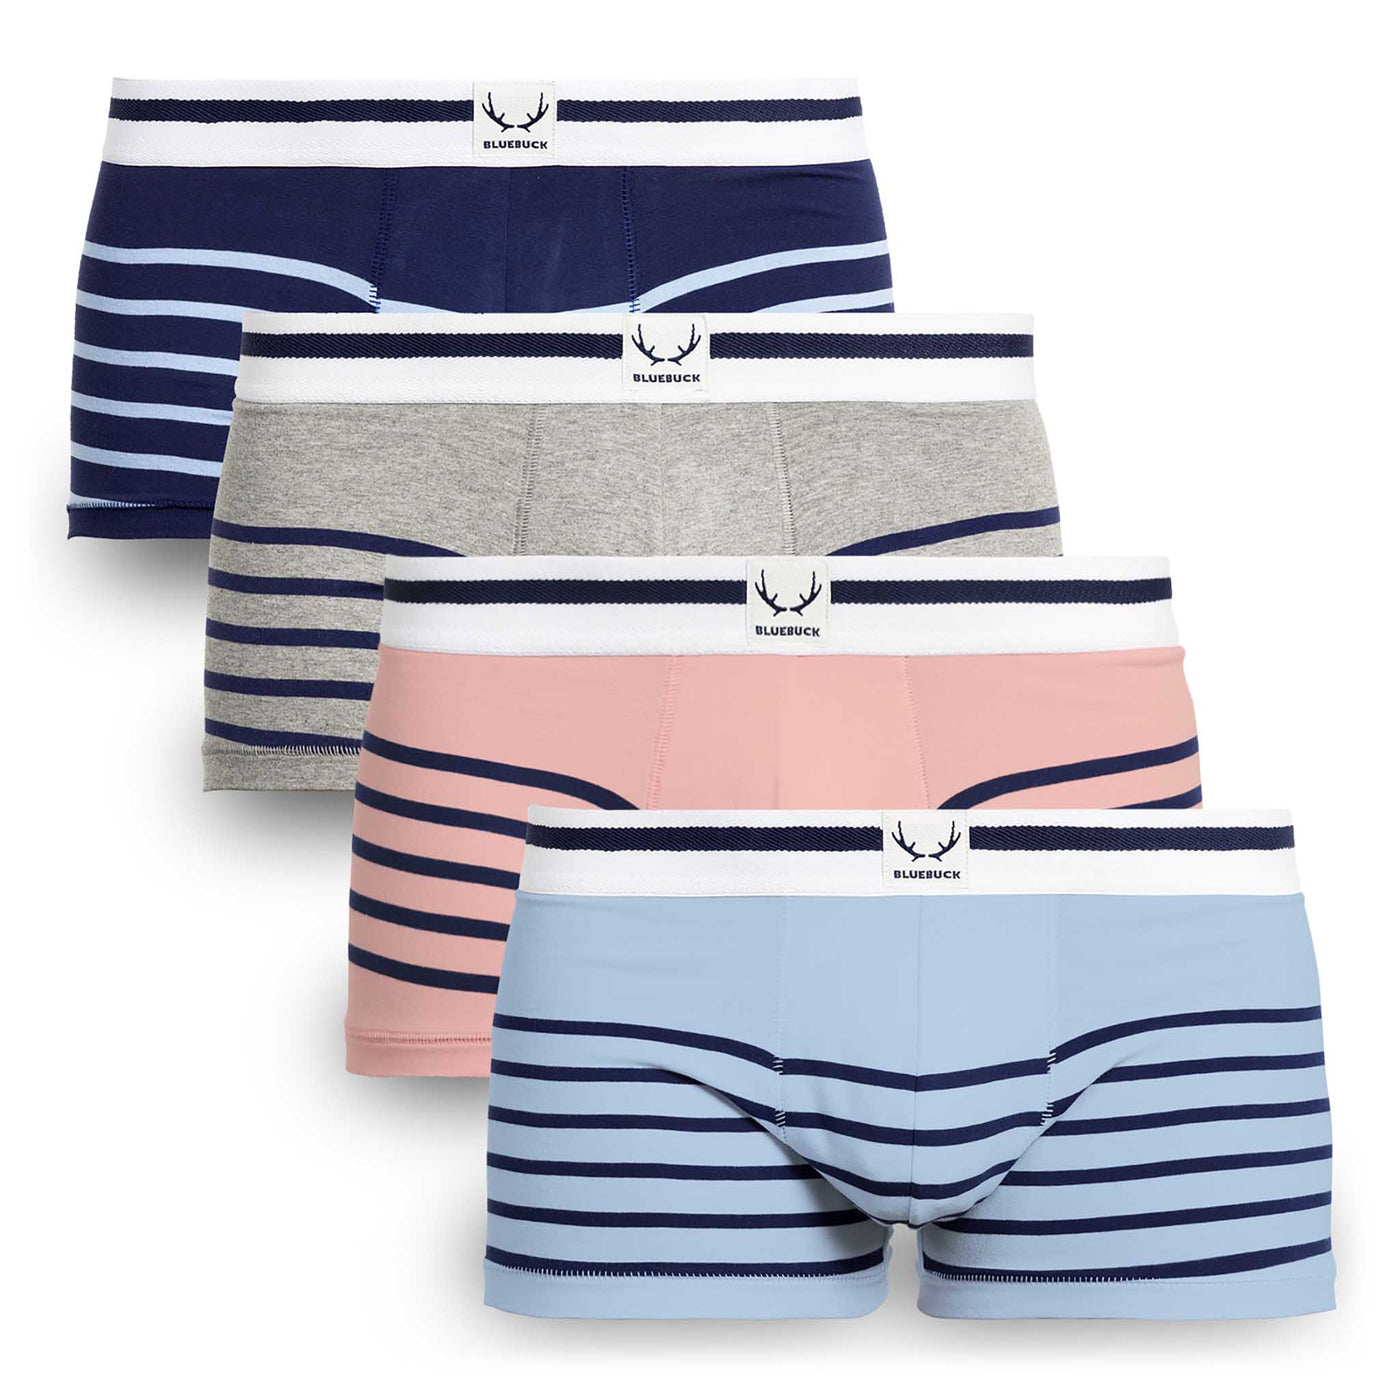 4 organic cotton nautical trunks - pink, grey, blue